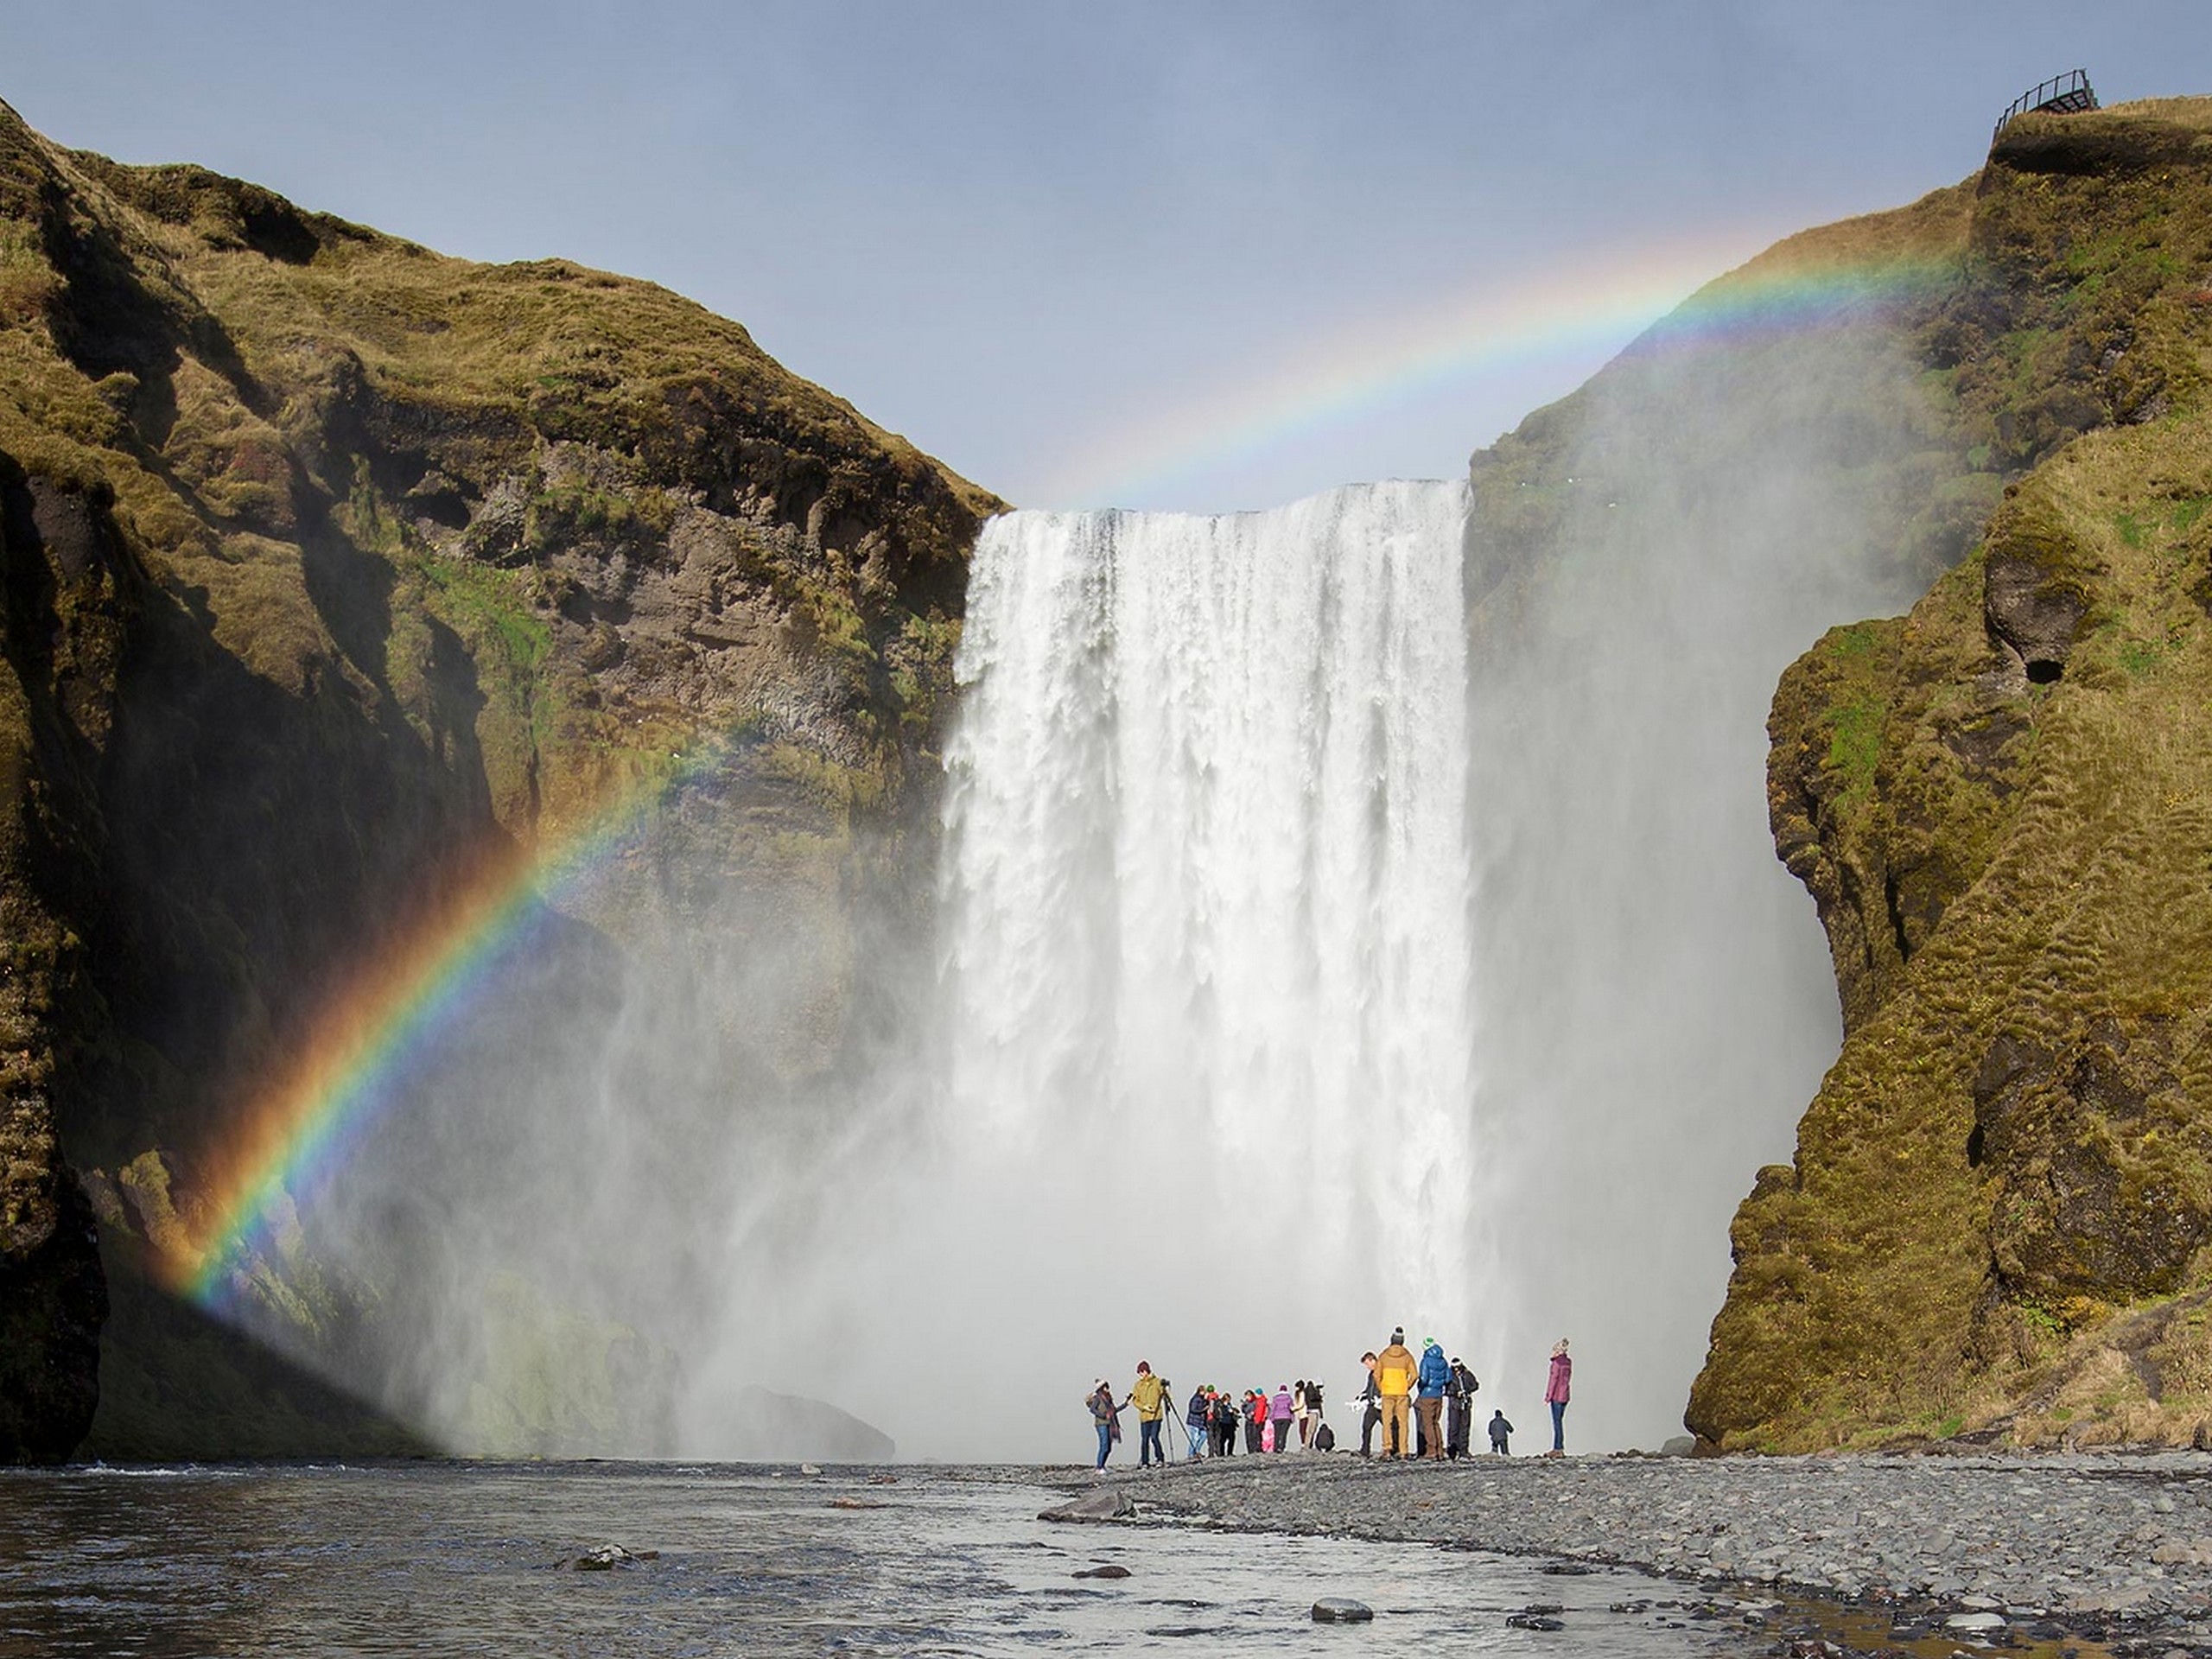 Beautiful rainbow near the waterfall seen in Iceland